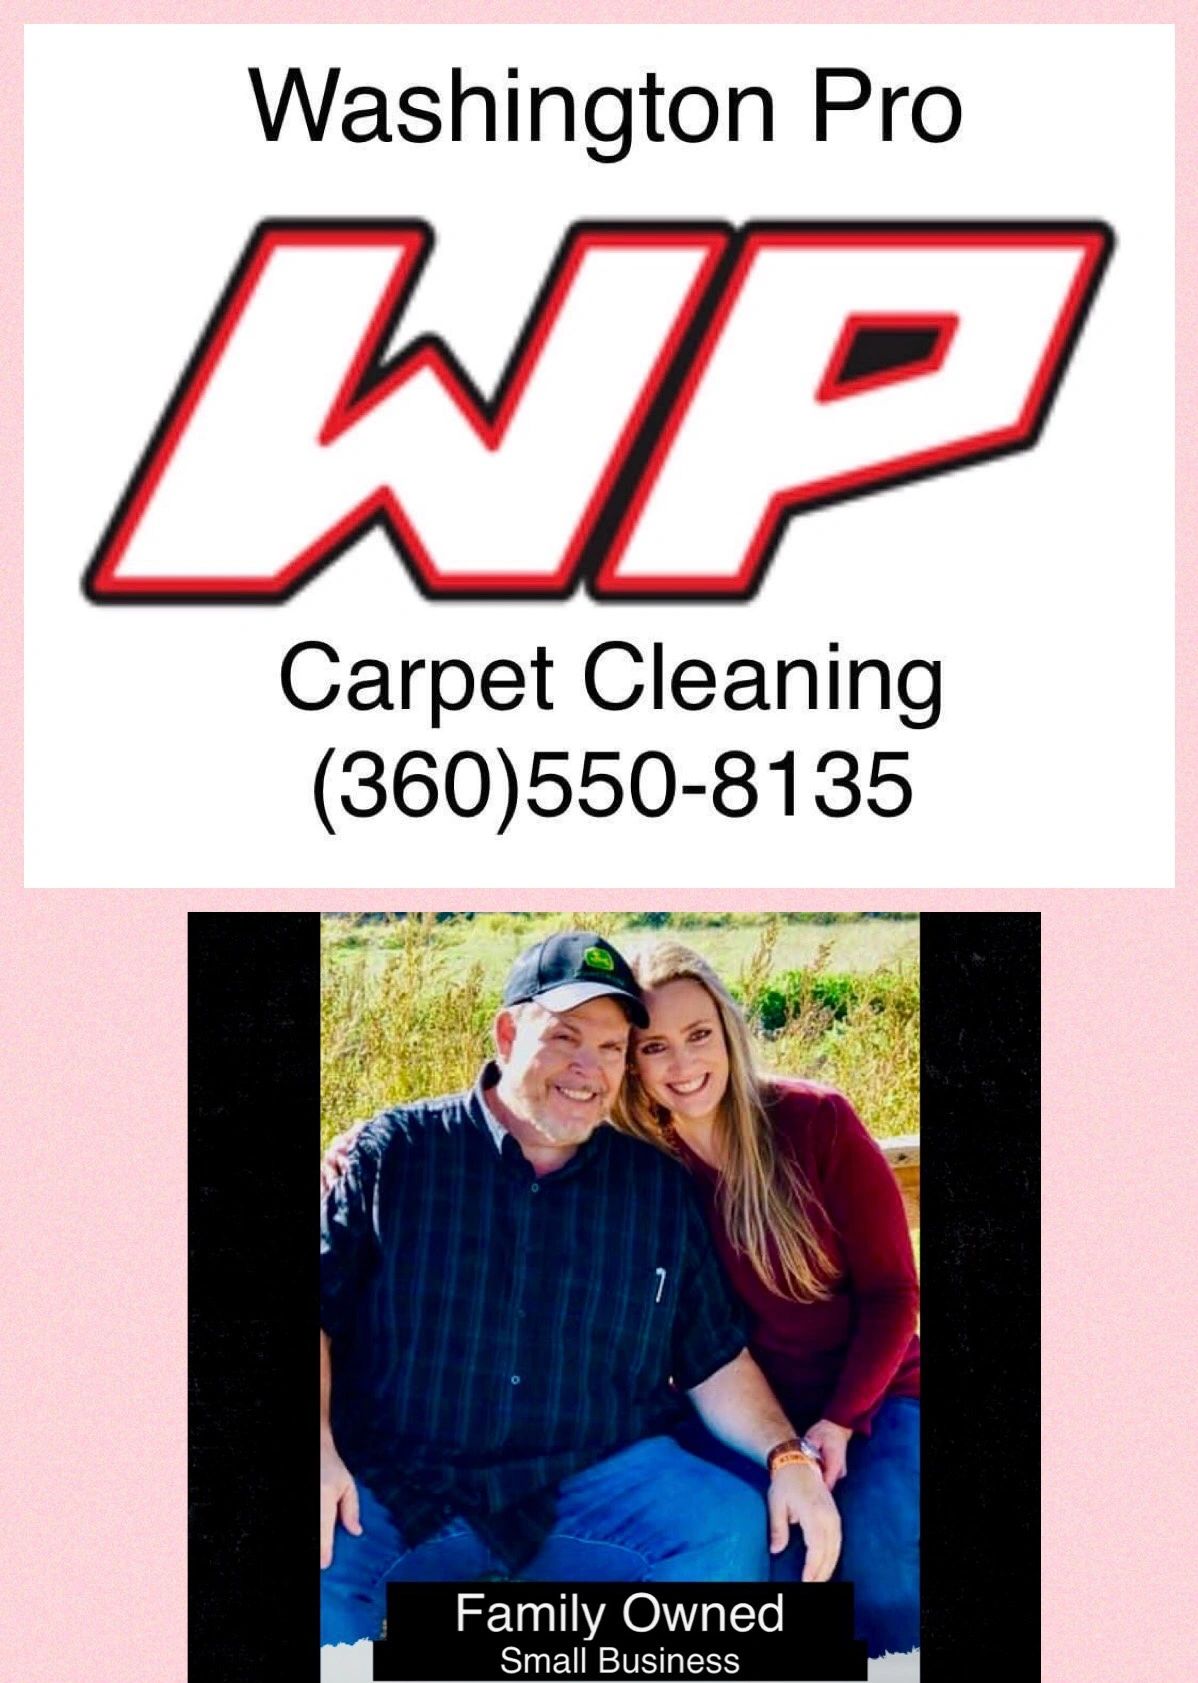 Carpet Cleaning - Washington Pro Carpet Cleaning